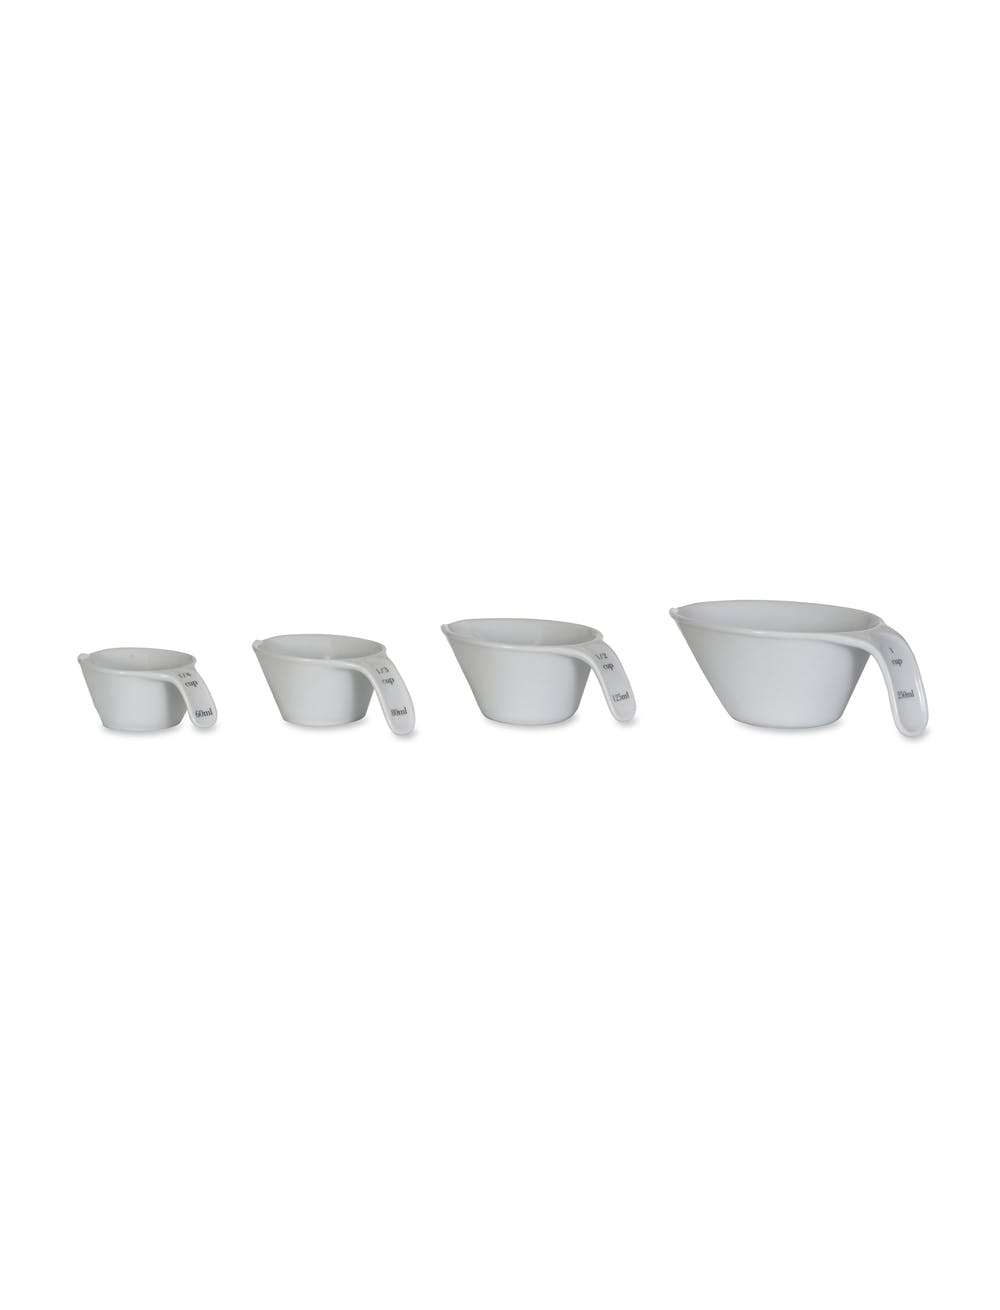 Porcelain measuring cup set